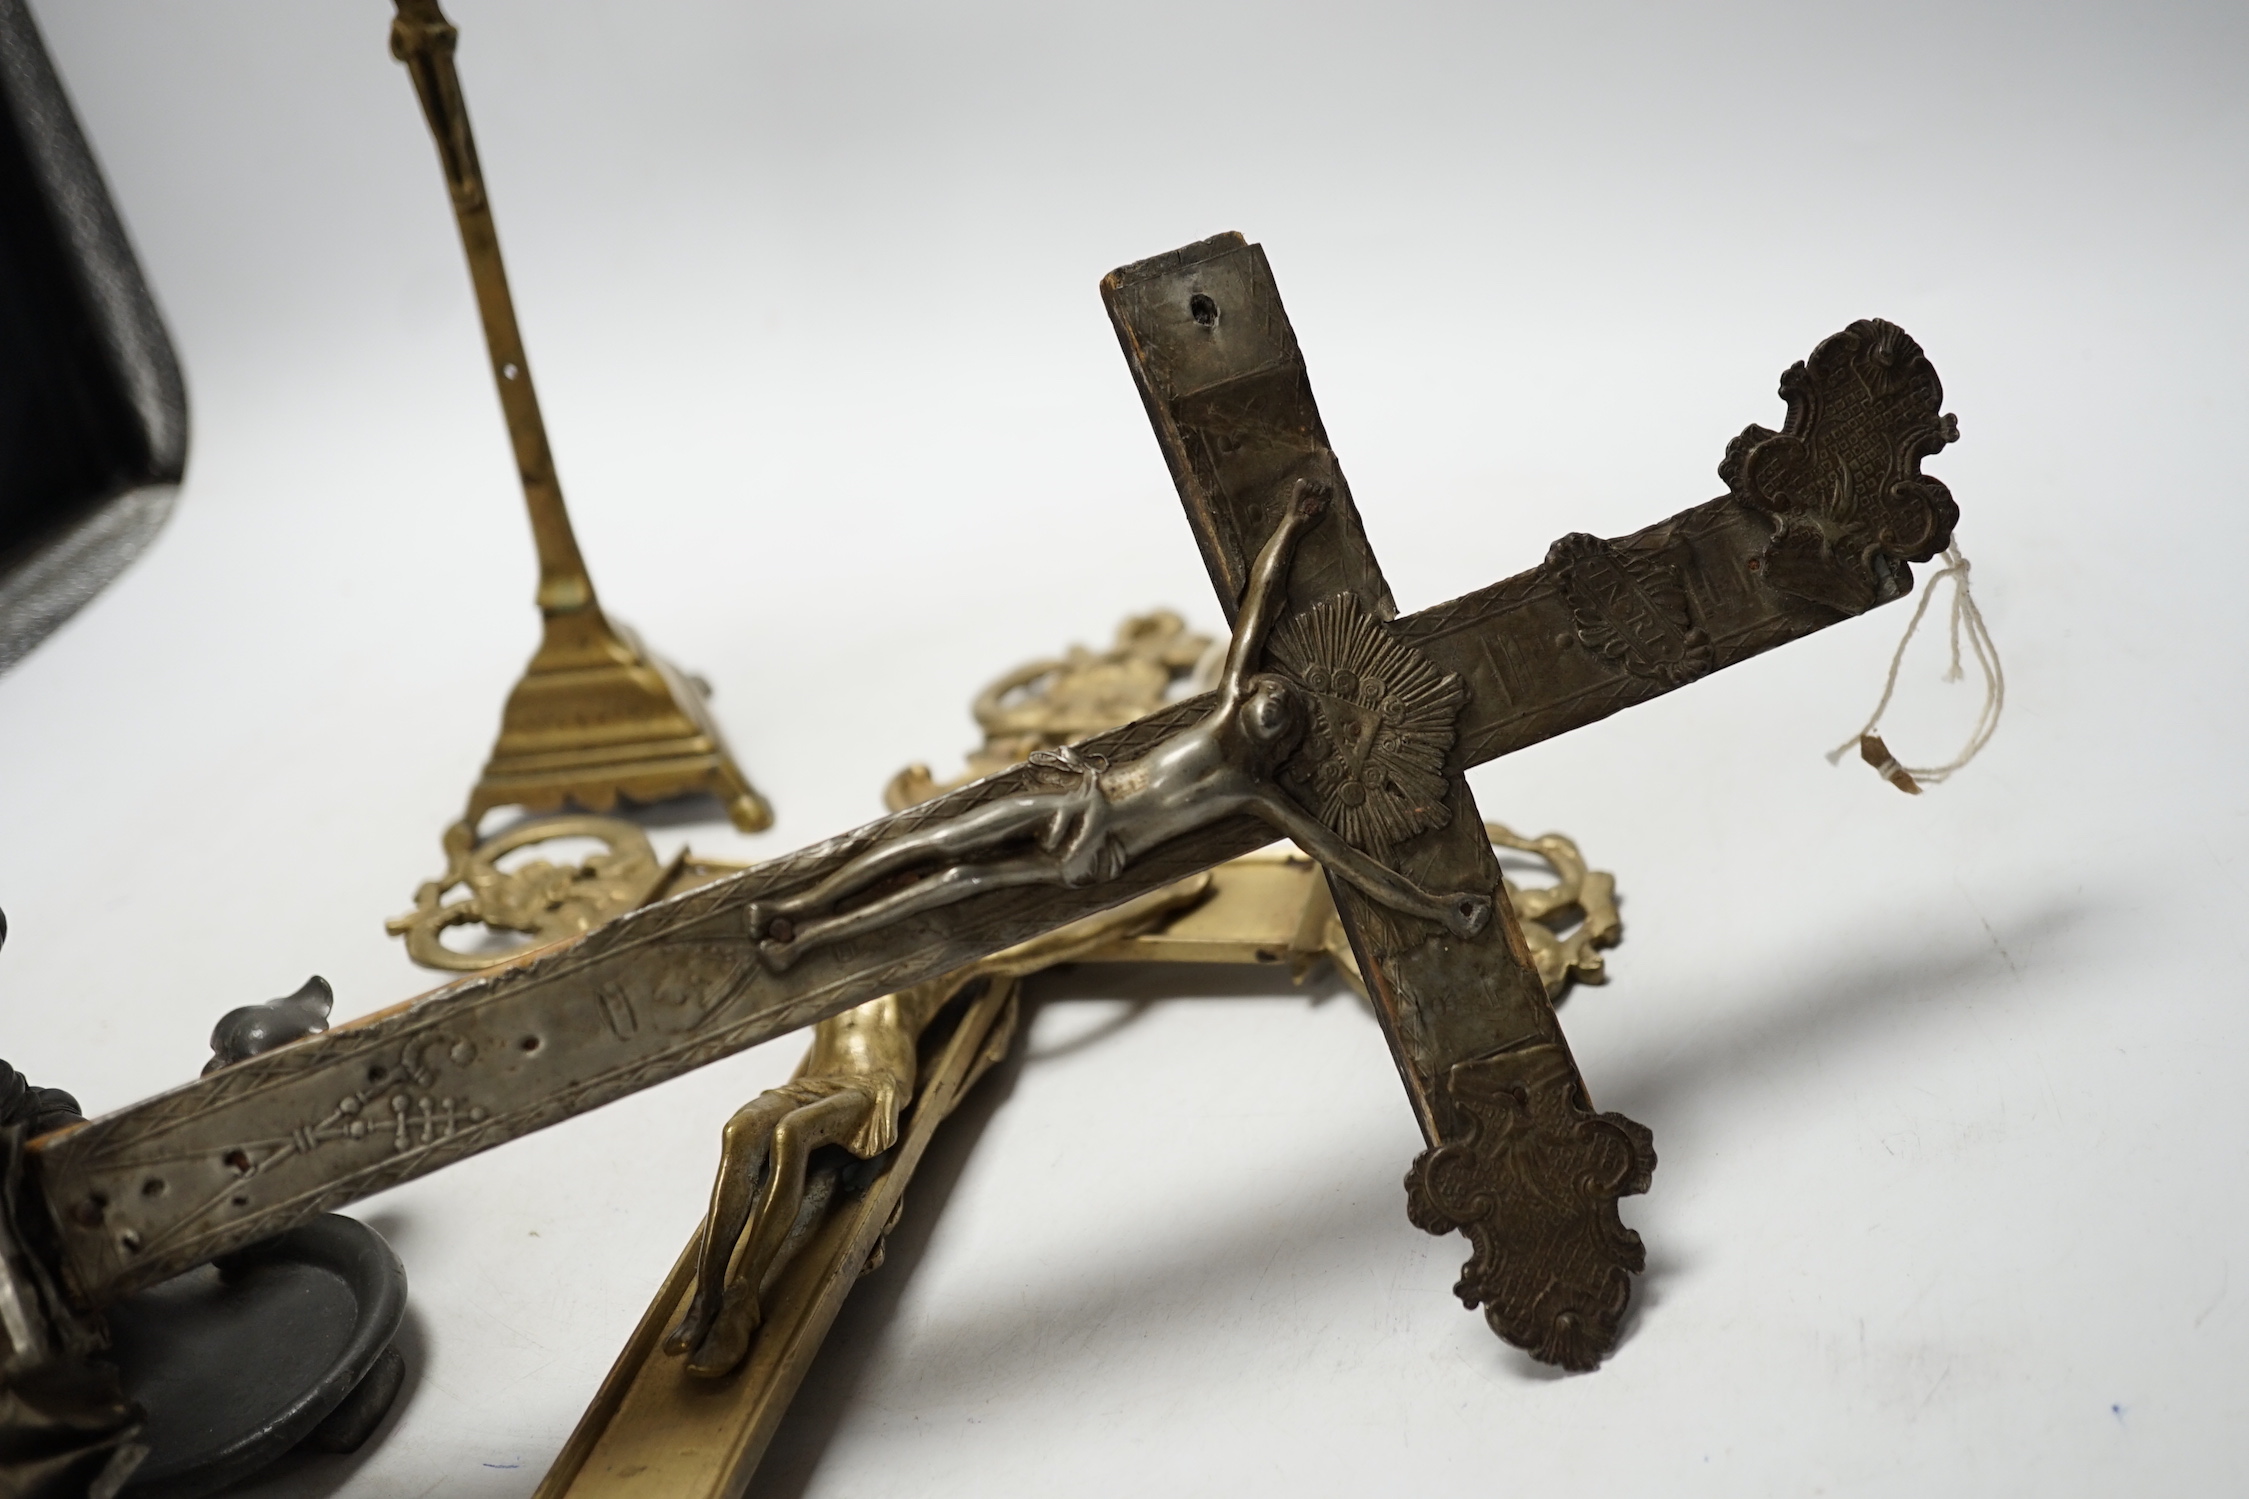 Three brass crucifixes and an Orivit pewter candlestick, tallest 45cm high